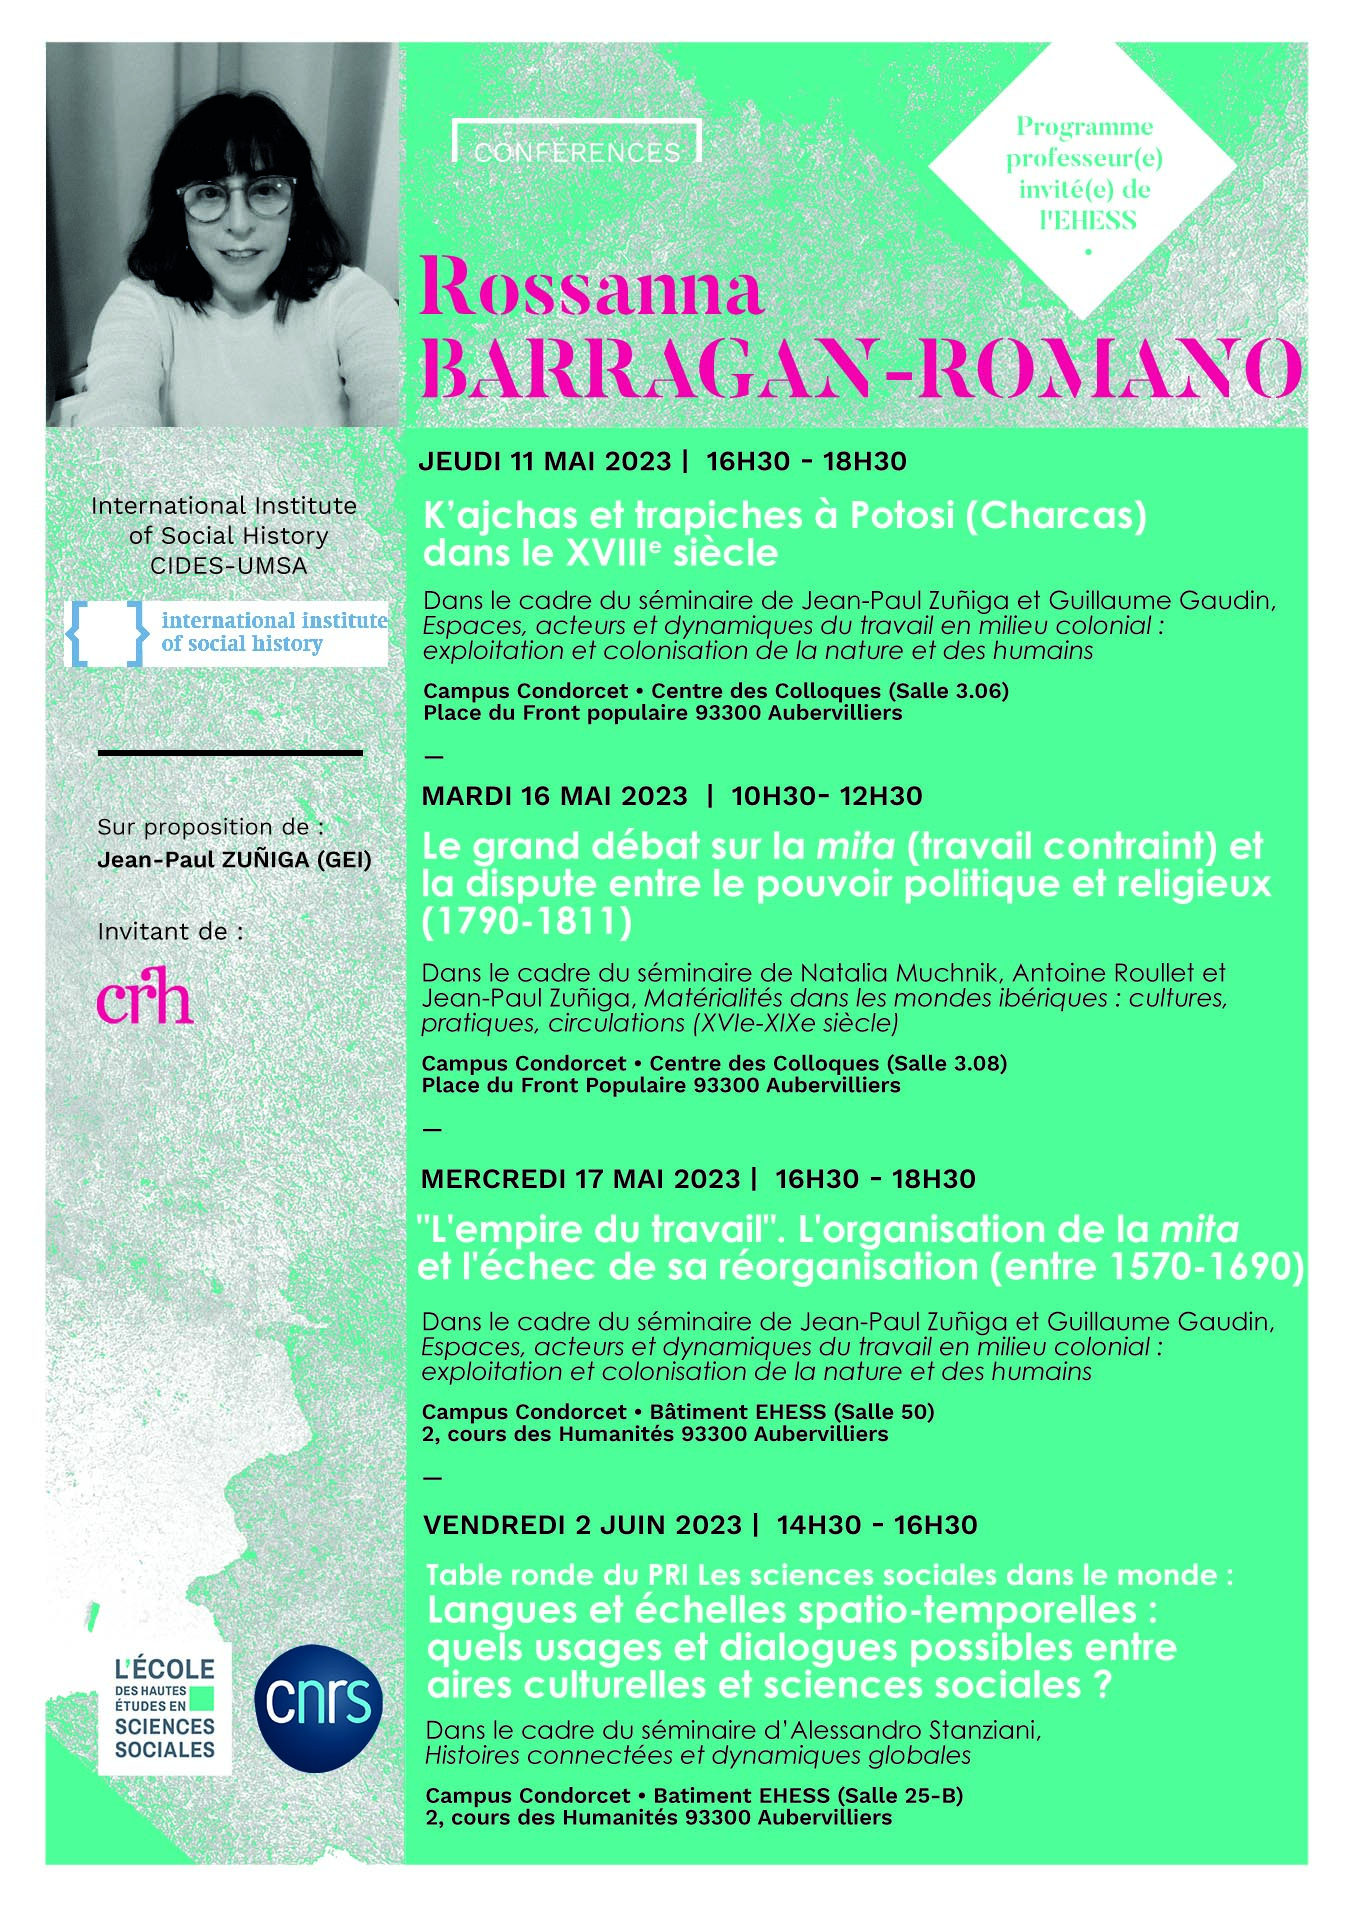 Rossana Barragan Romano (International Institute of Social History/ CIDES-UMSA)